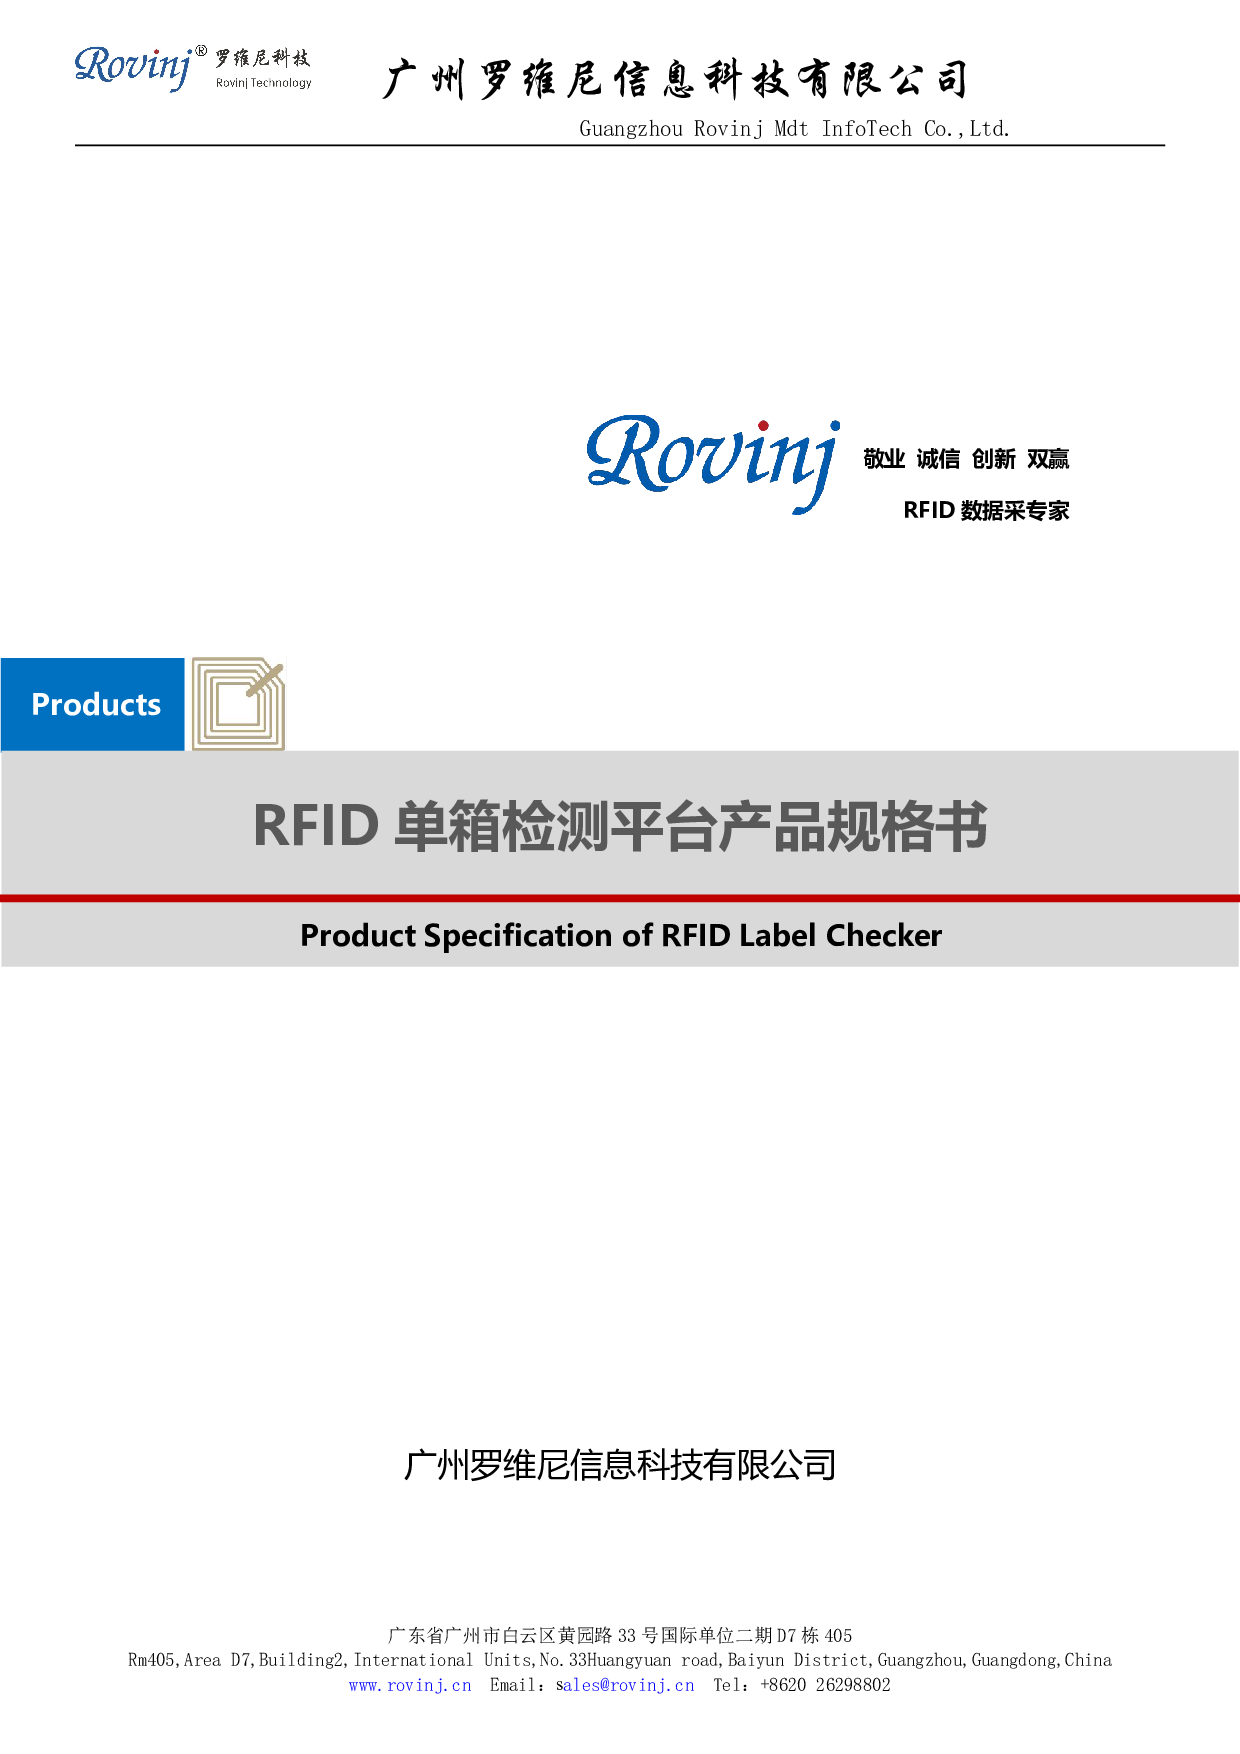 RFID单箱检测平台，RFID验标机图片